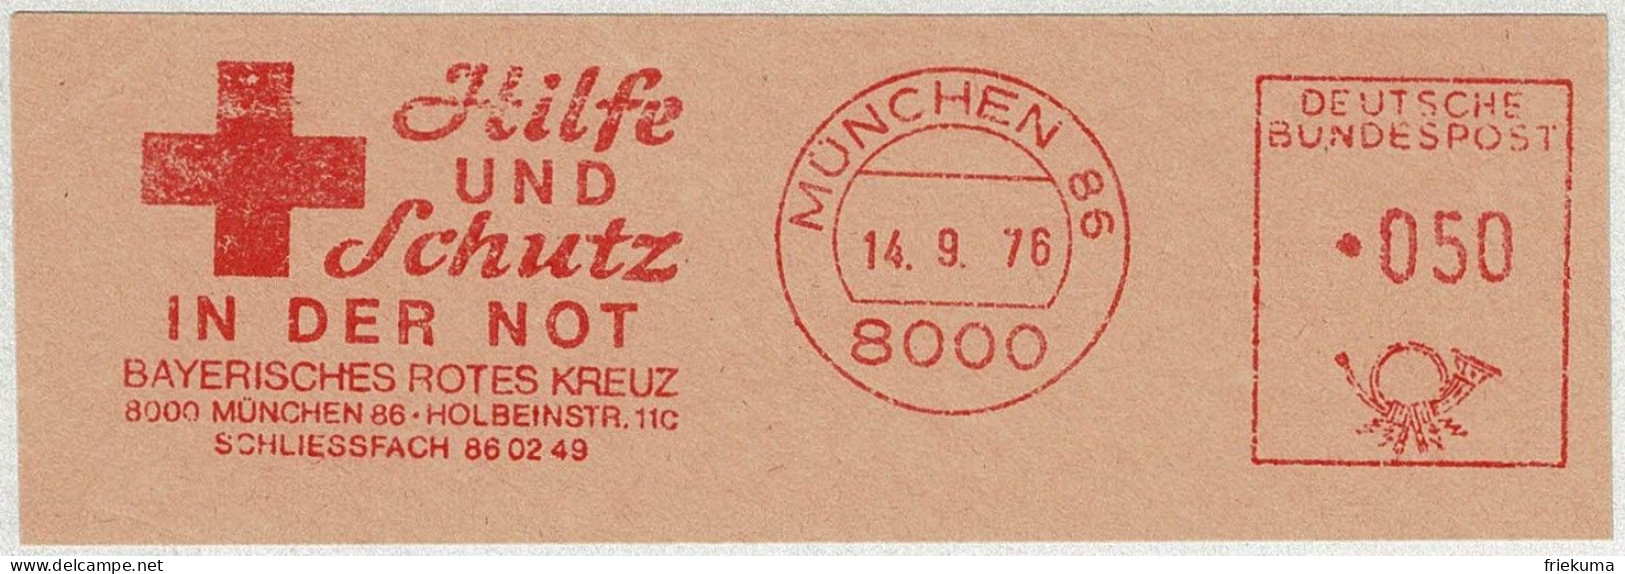 Deutsche Bundespost 1976, Freistempel / EMA / Meterstamp Bayerisches Rotes Kreuz München / Croix-Rouge / Red Cross - Croix-Rouge